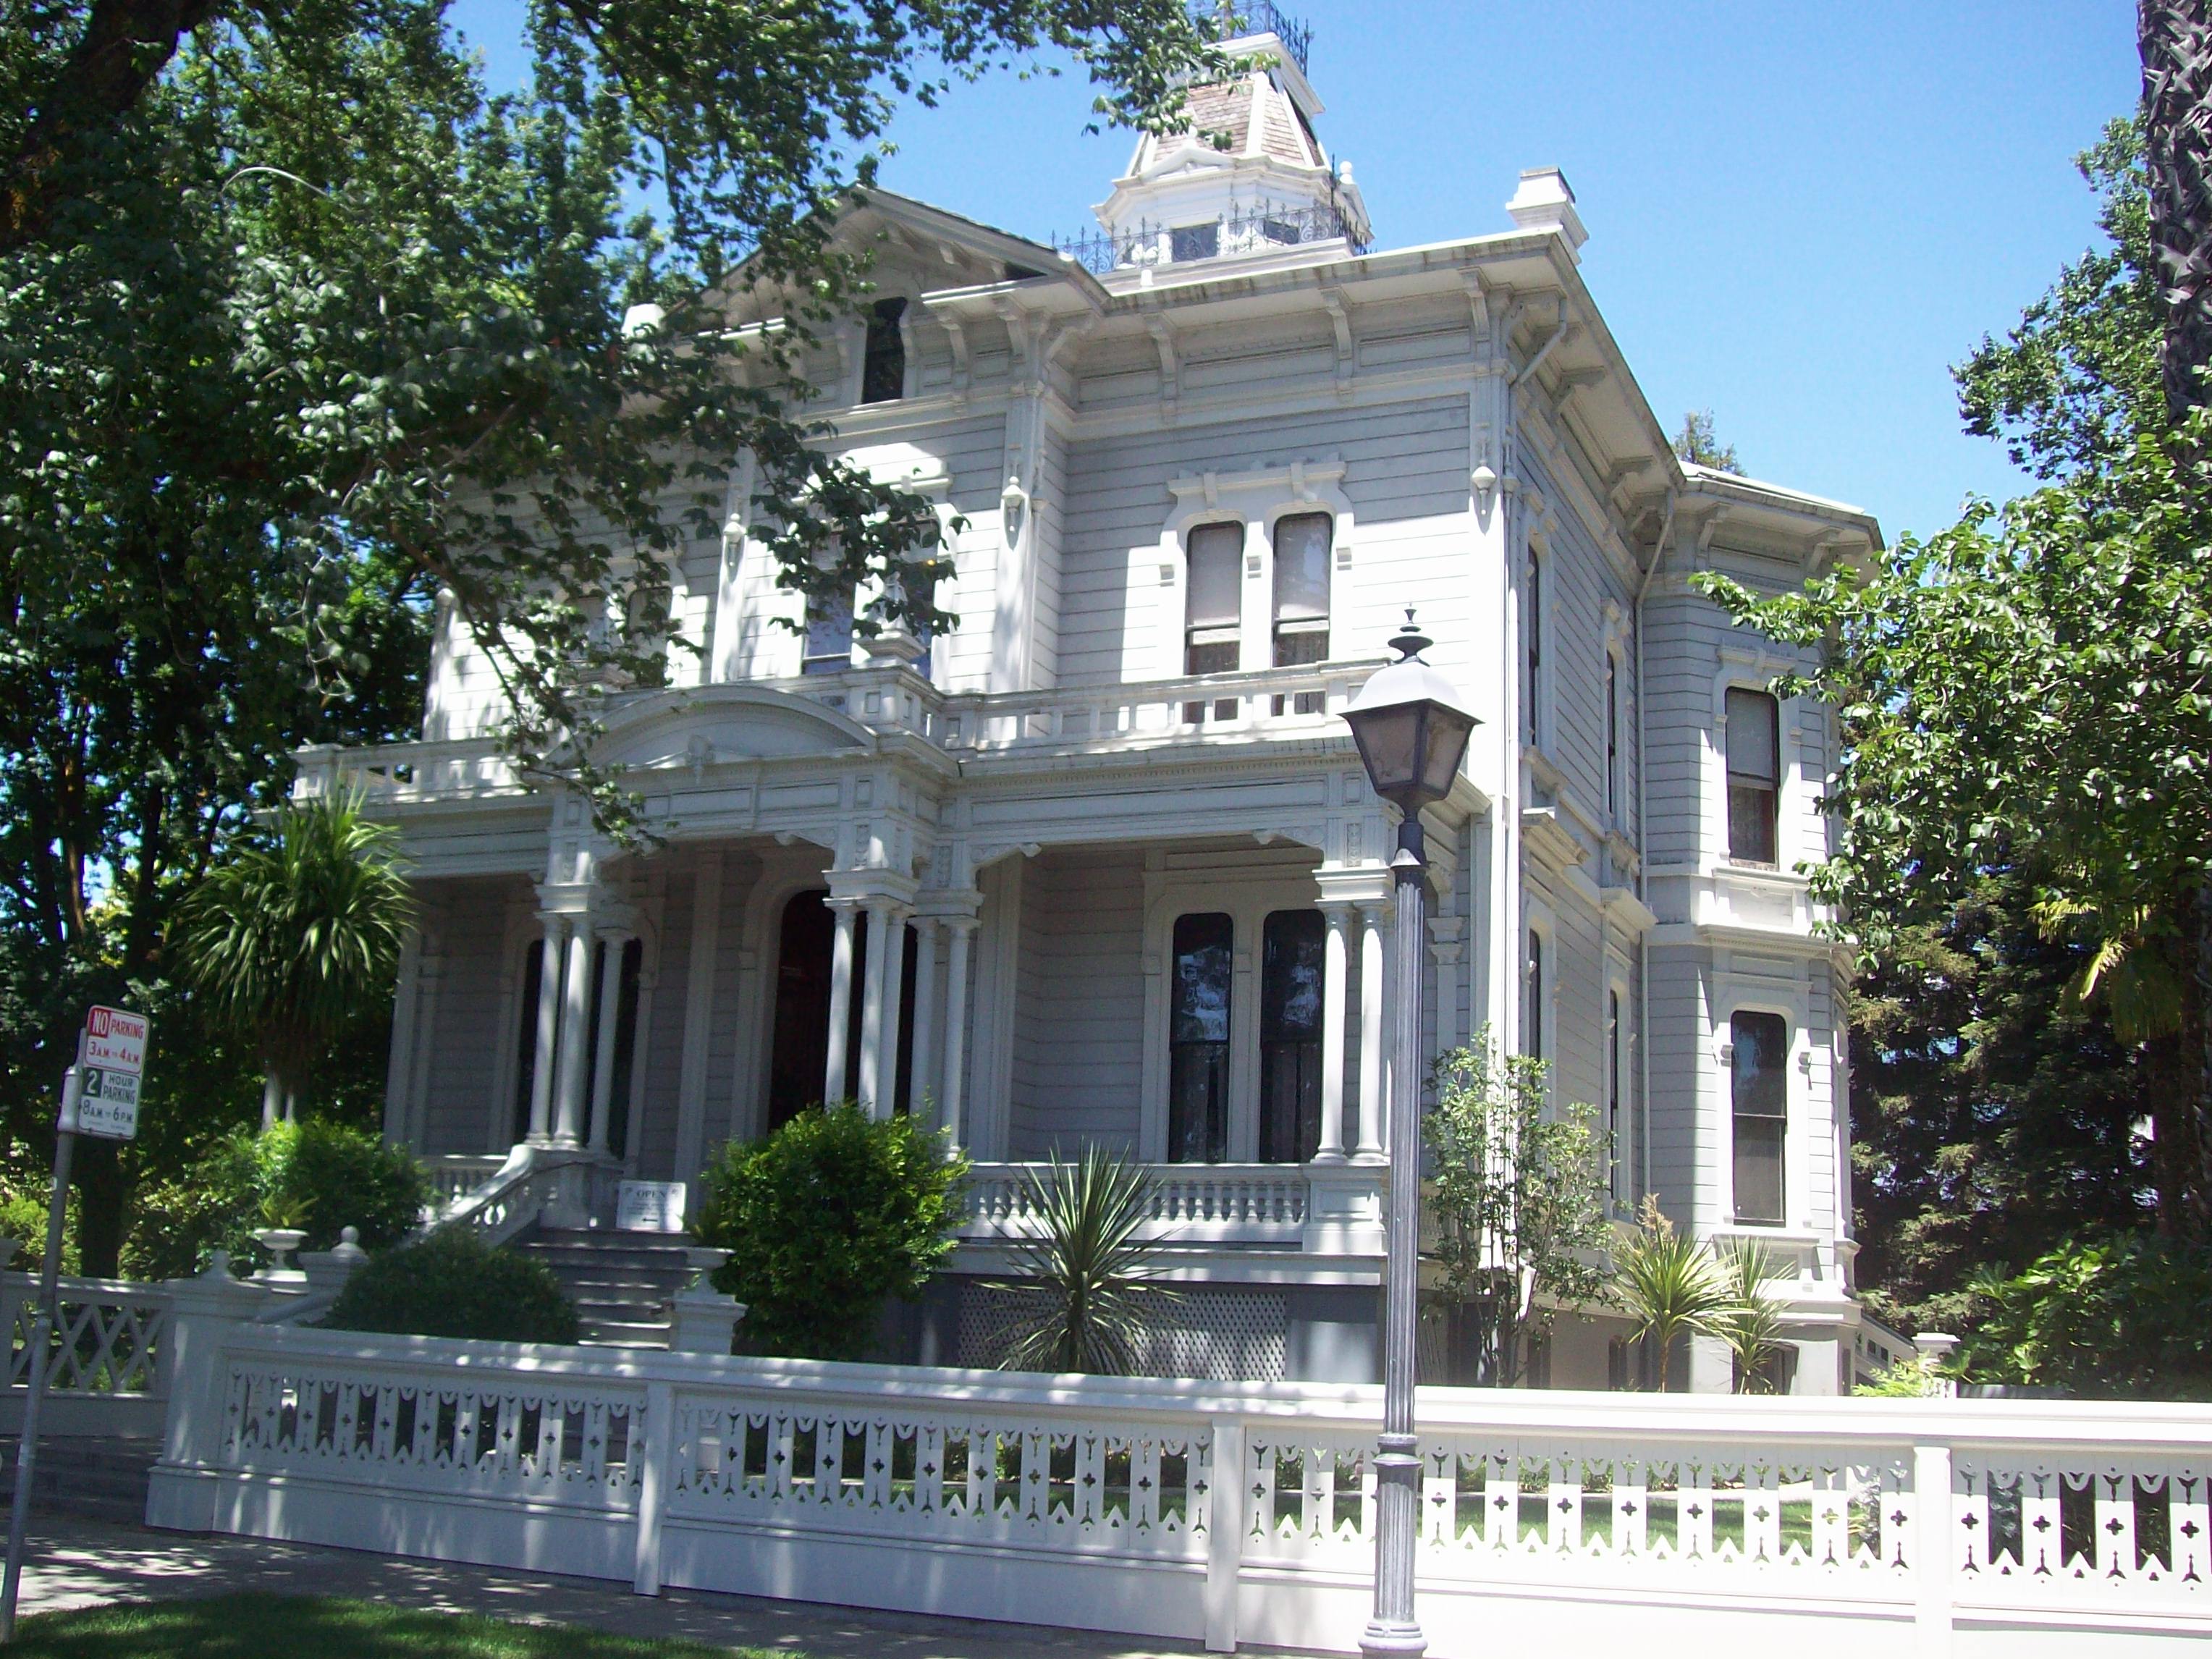 McHenry Mansion - Wikipedia